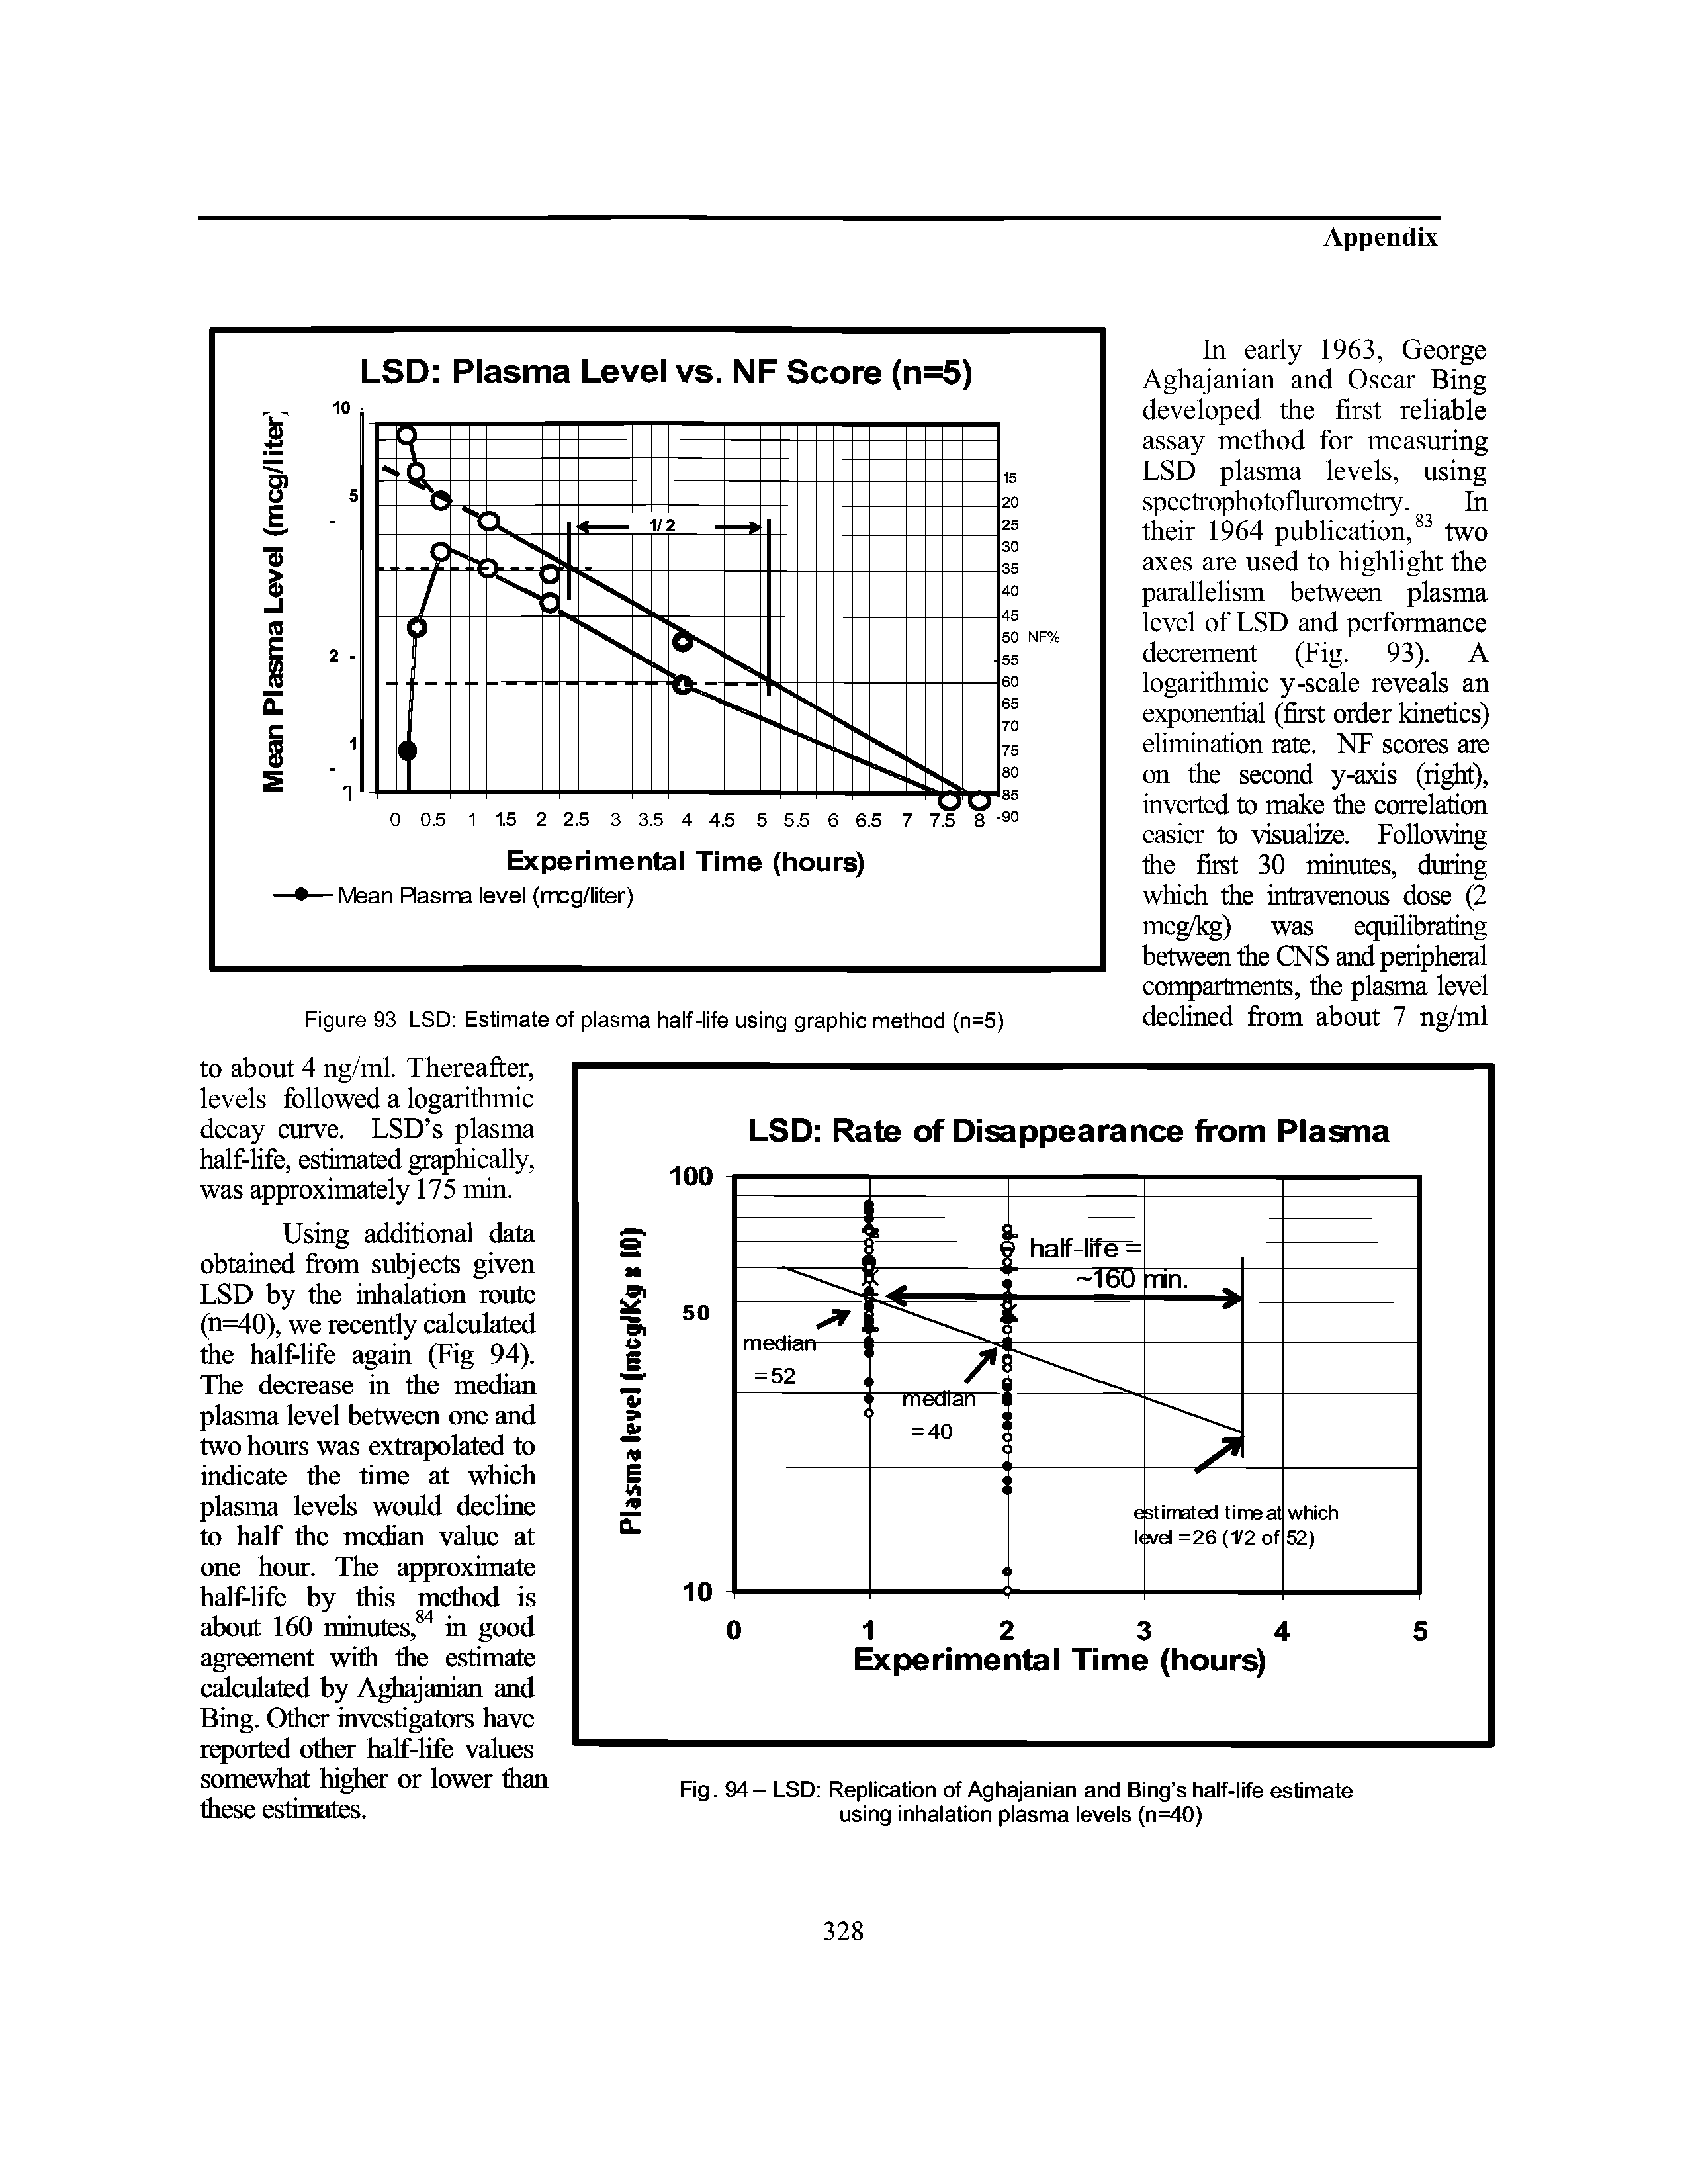 Fig. 94 - LSD Replication of Aghajanian and Bing s half-life estimate using inhalation plasma levels (n=40)...